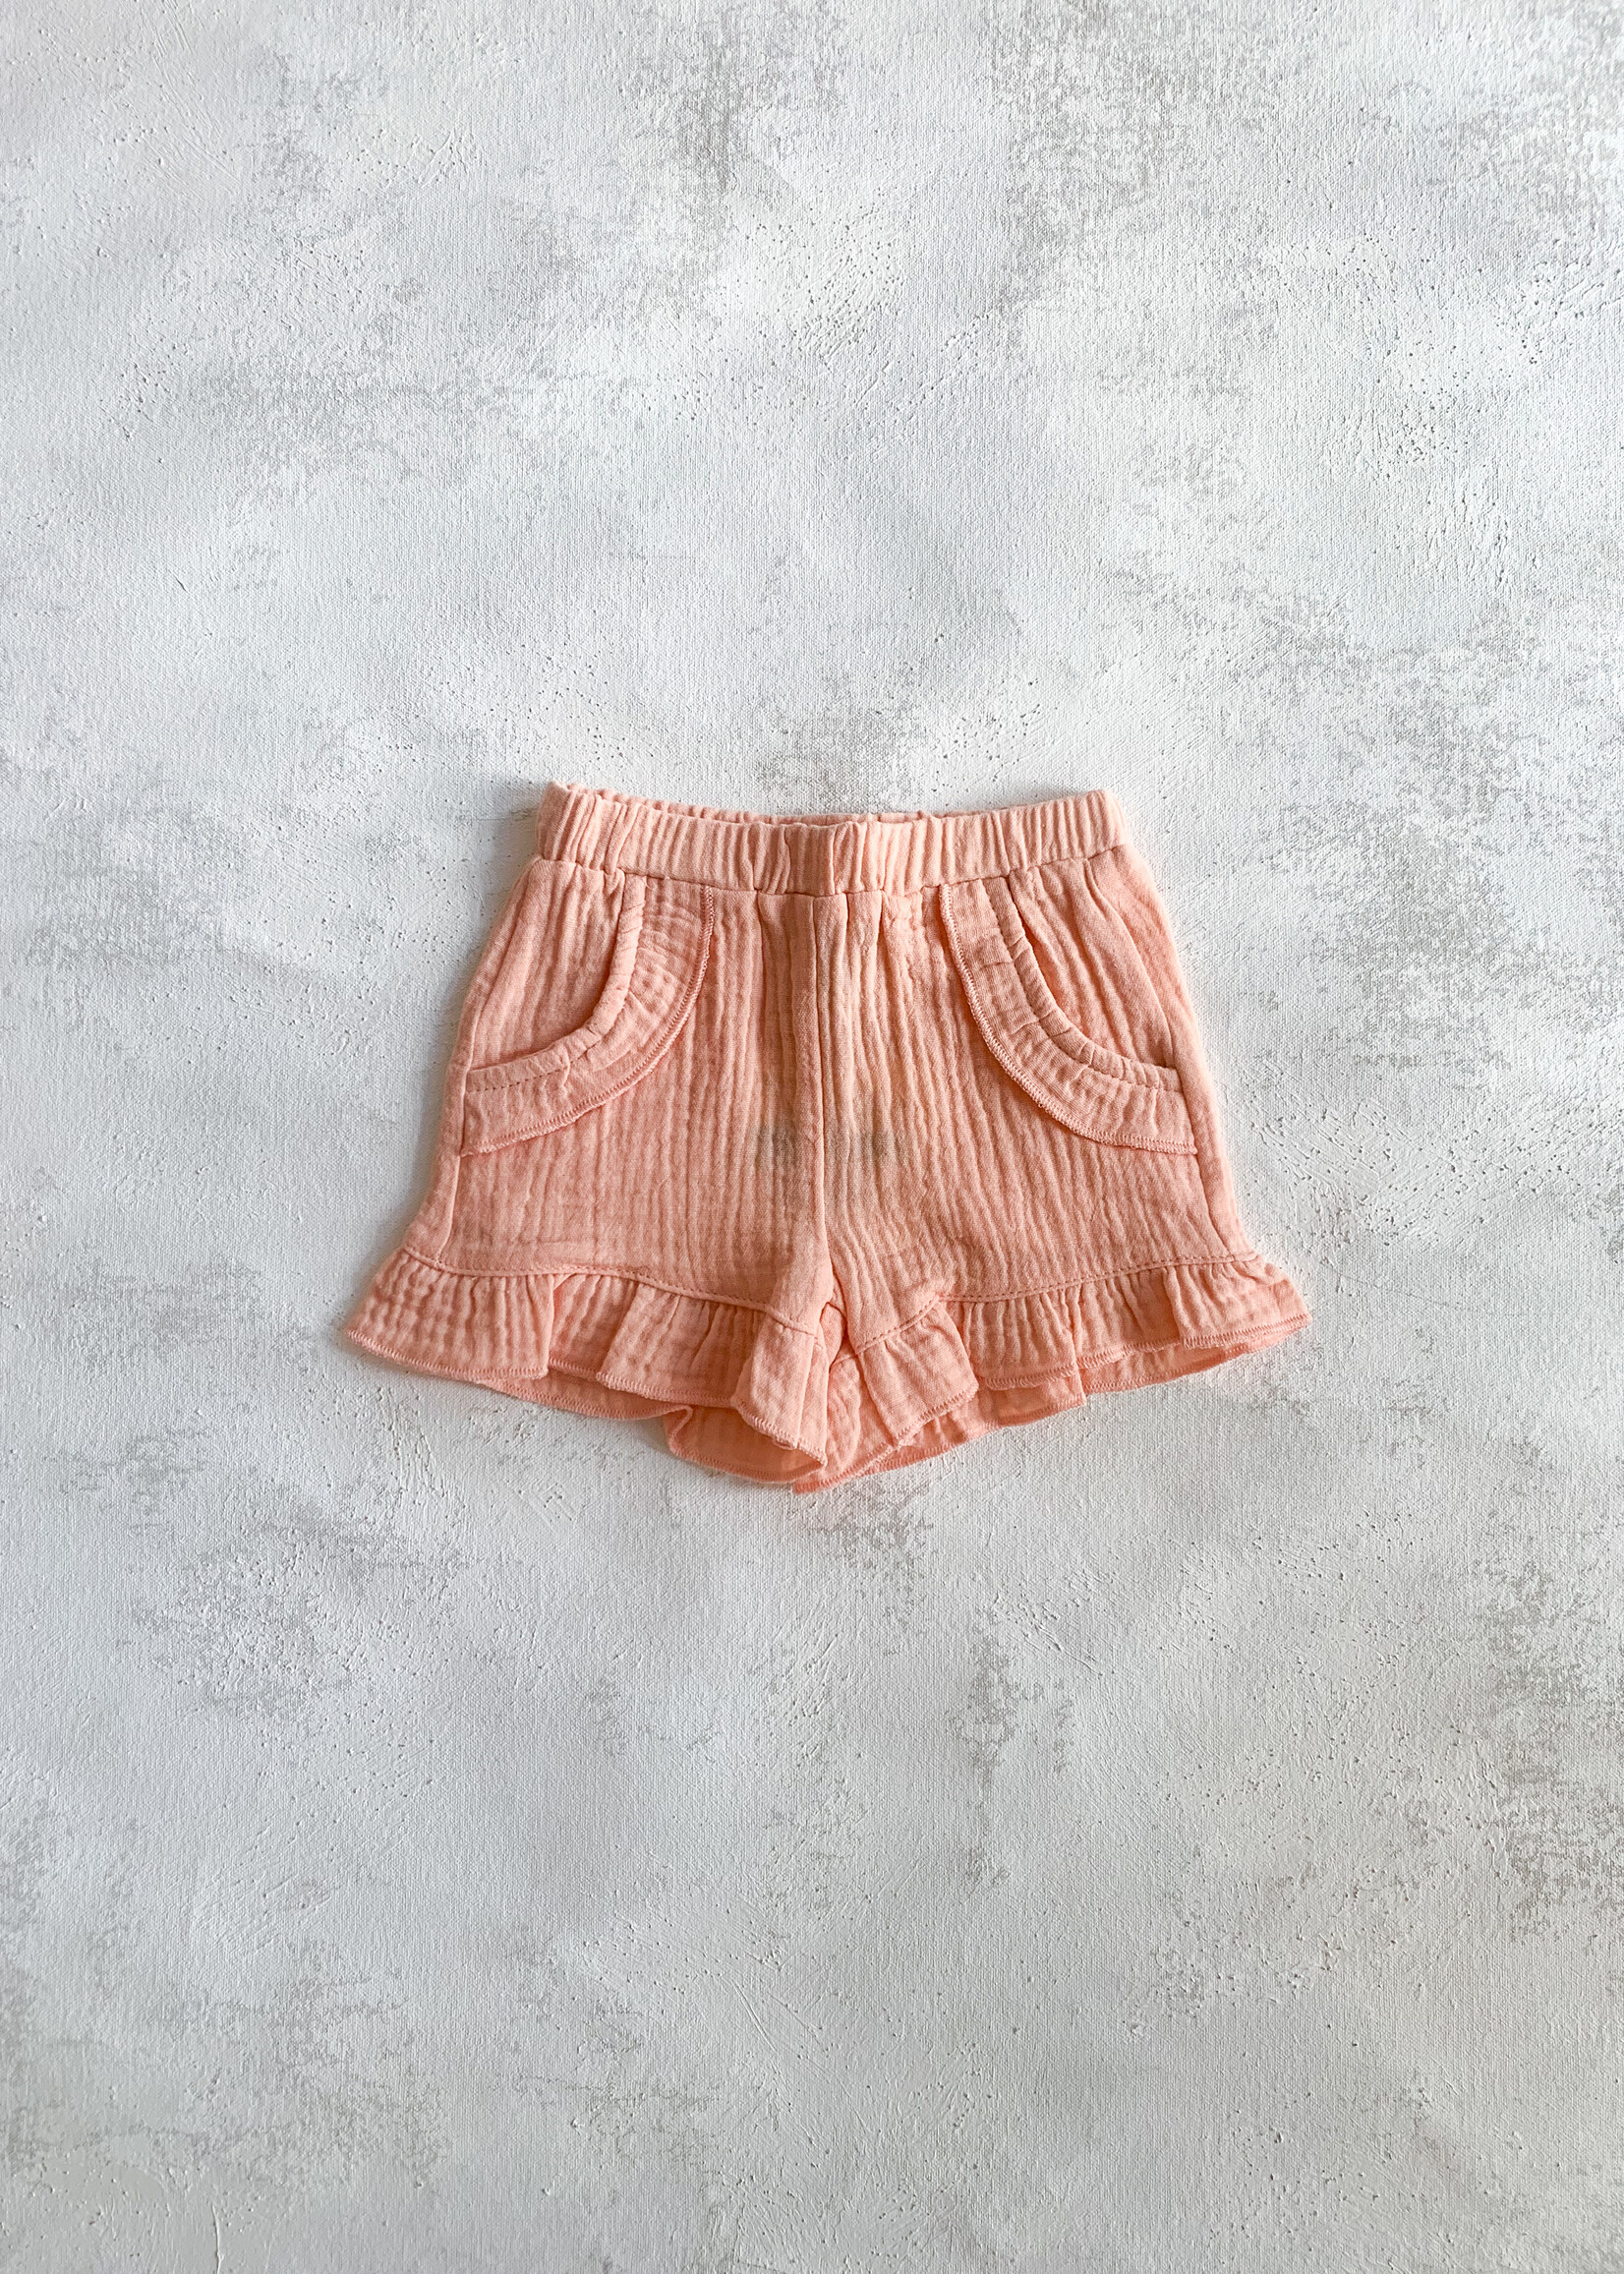 Elitaire Petite Lyra Shorts in Peach